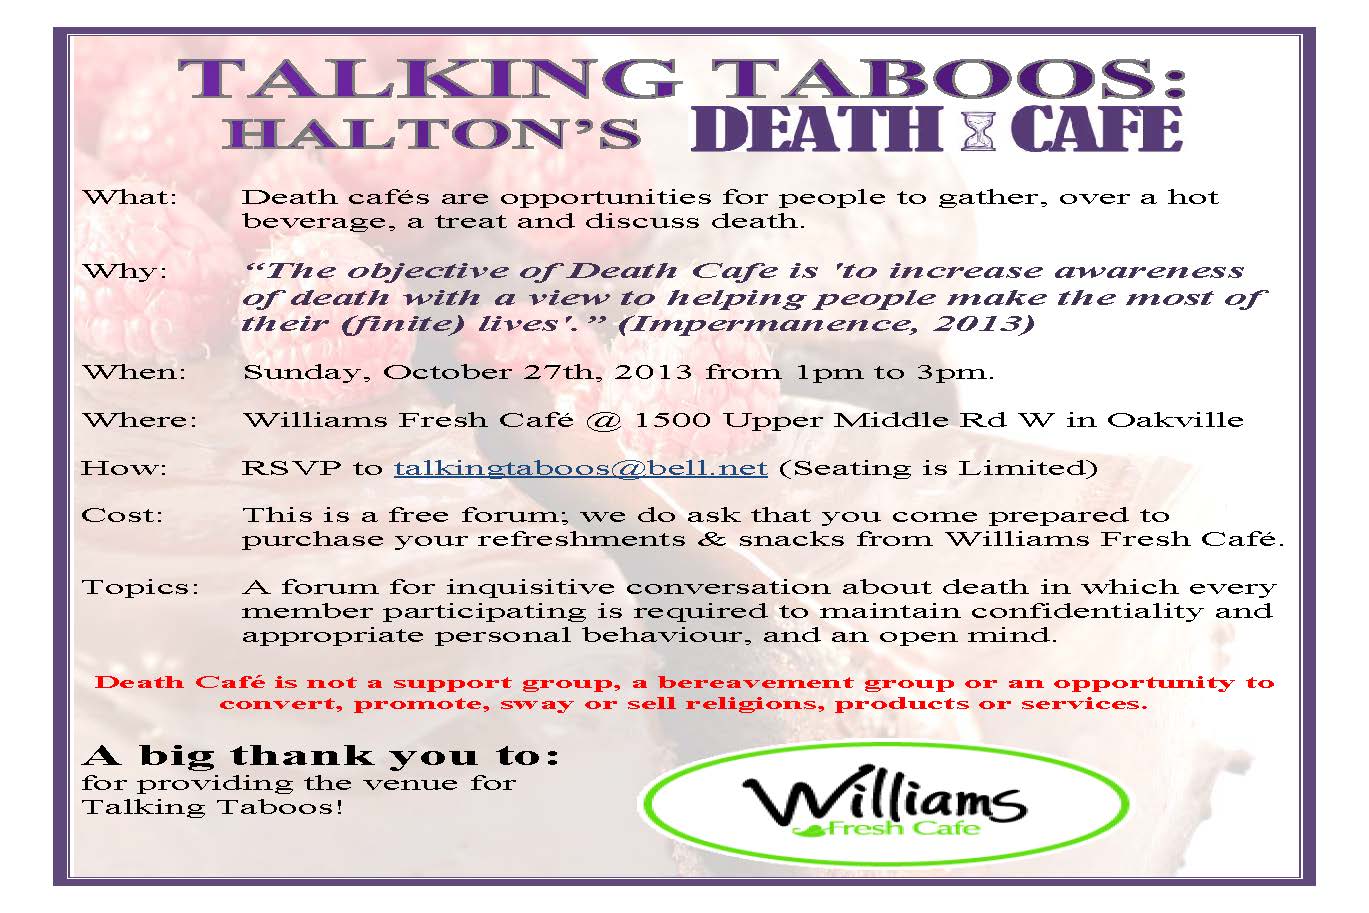 Halton's Death Cafe